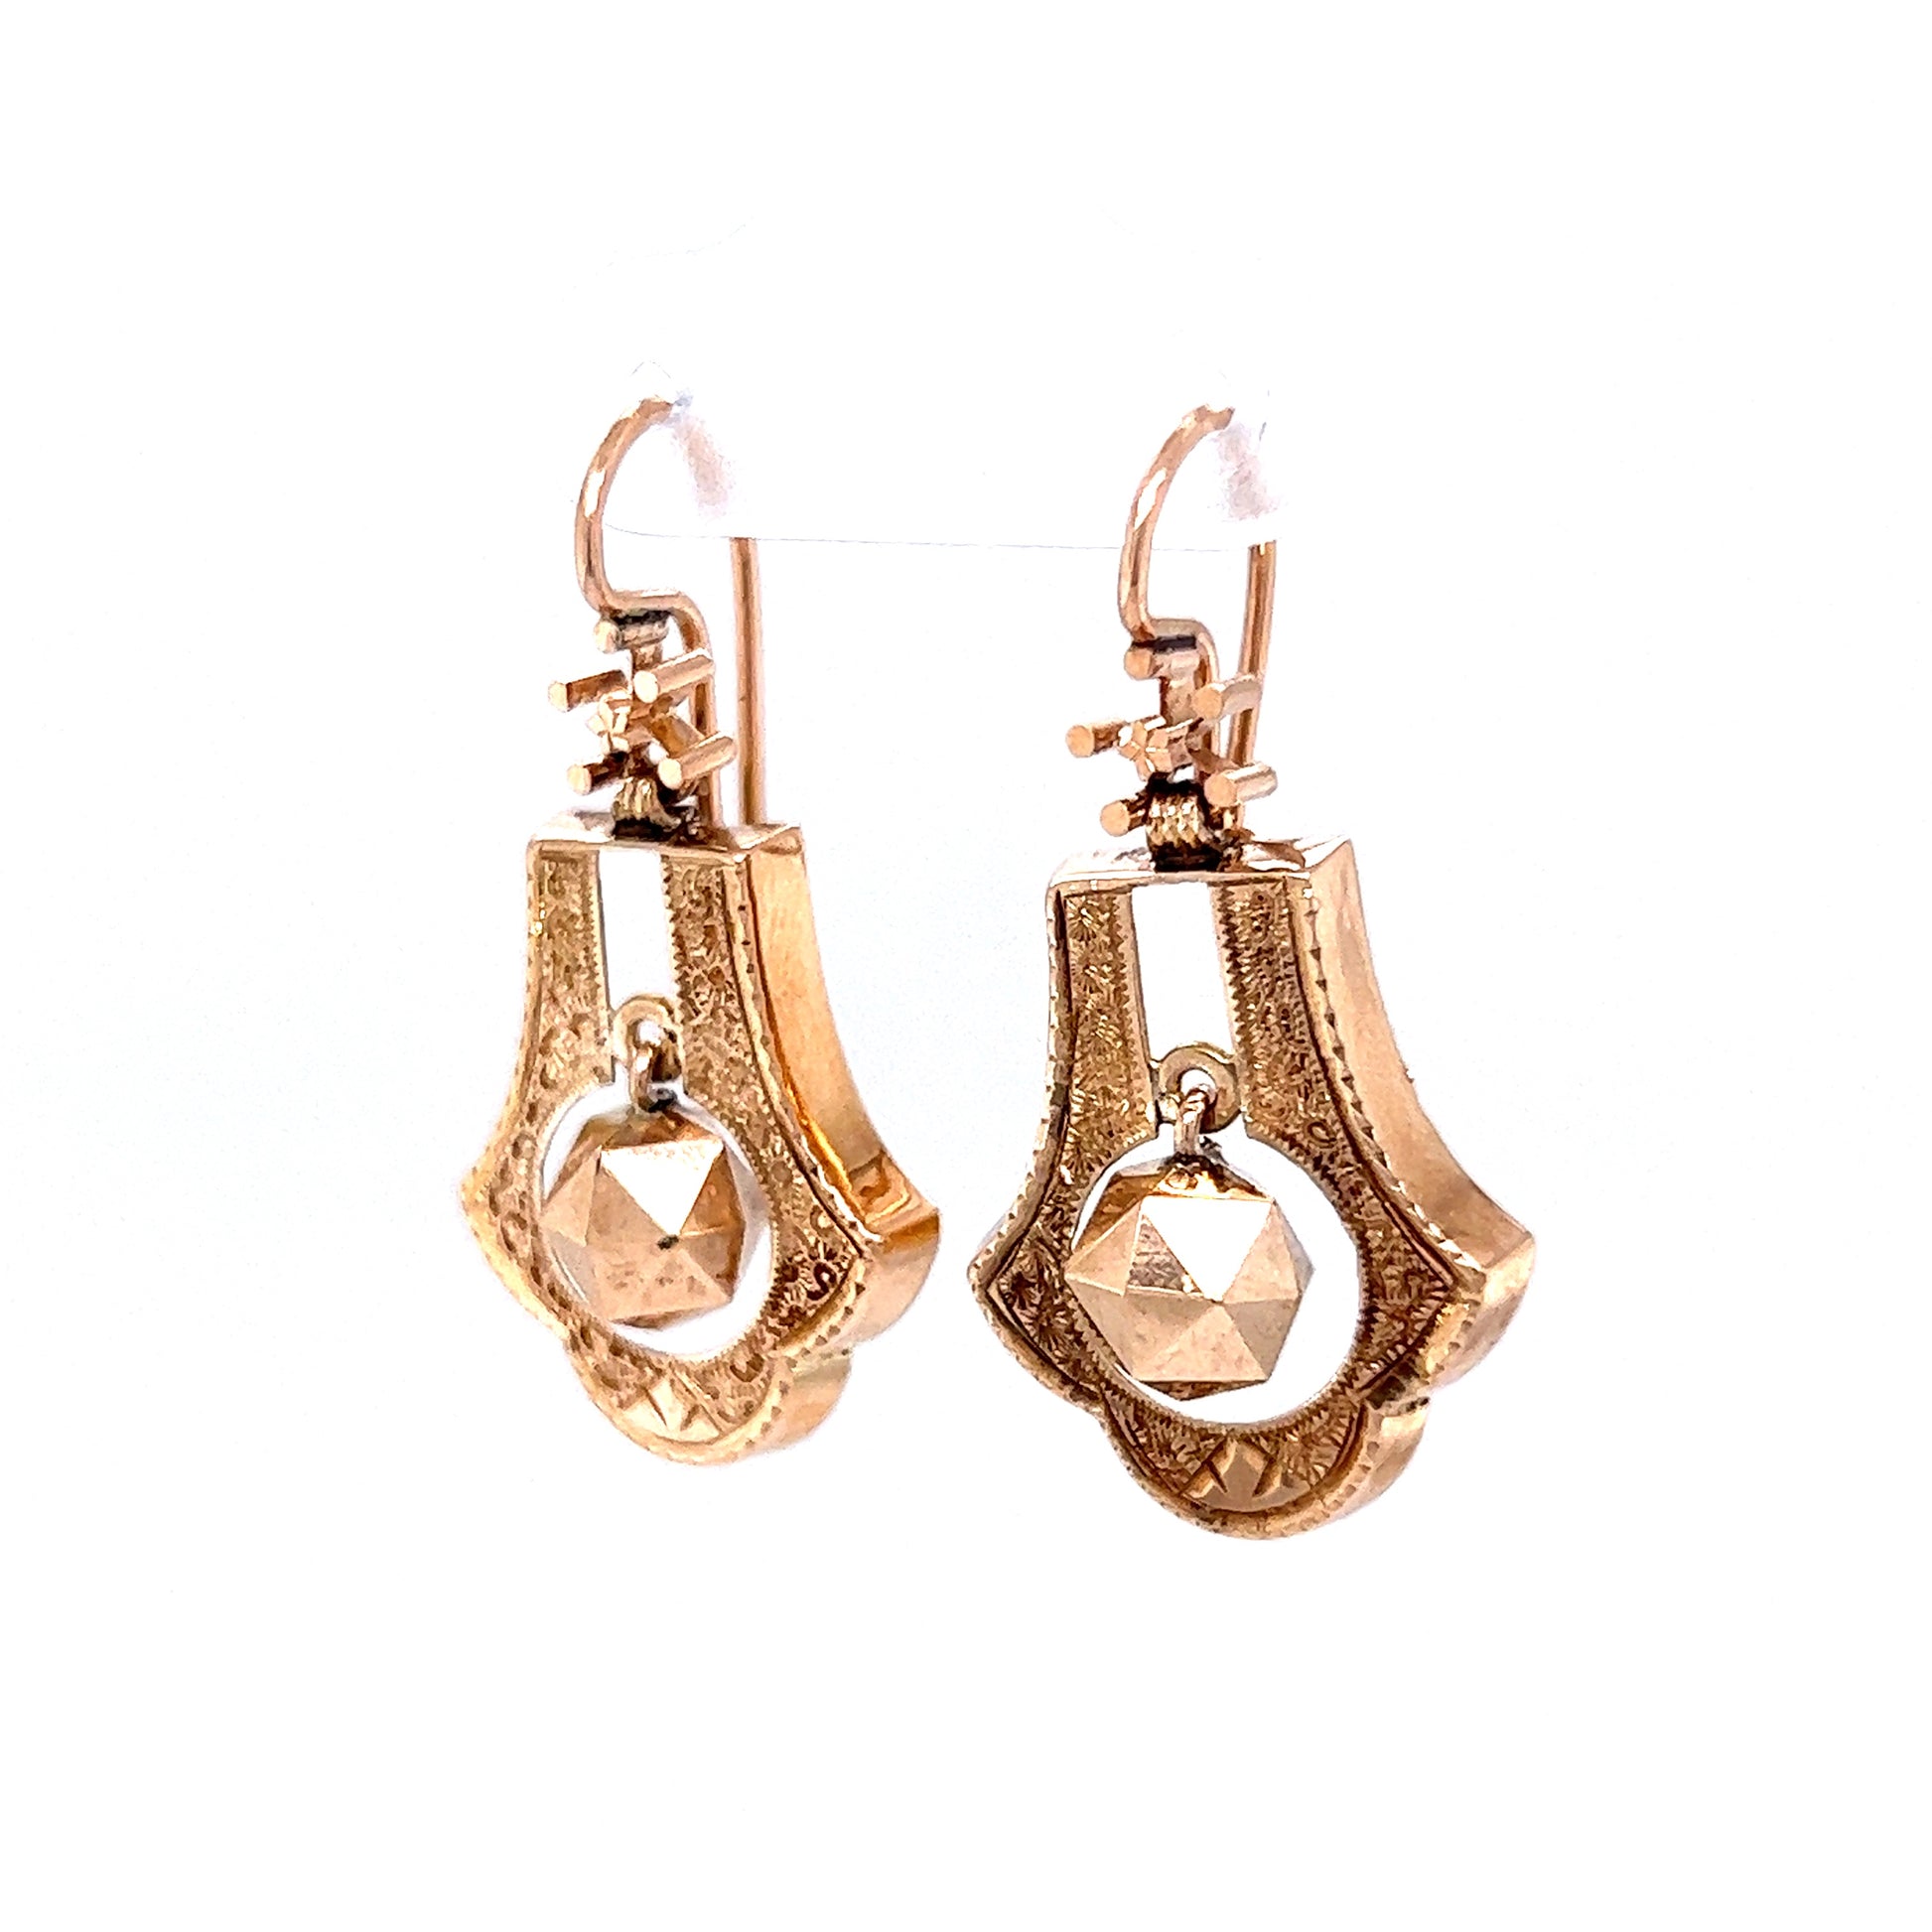 Antique Victorian Dangle Earrings in 14k Yellow Gold